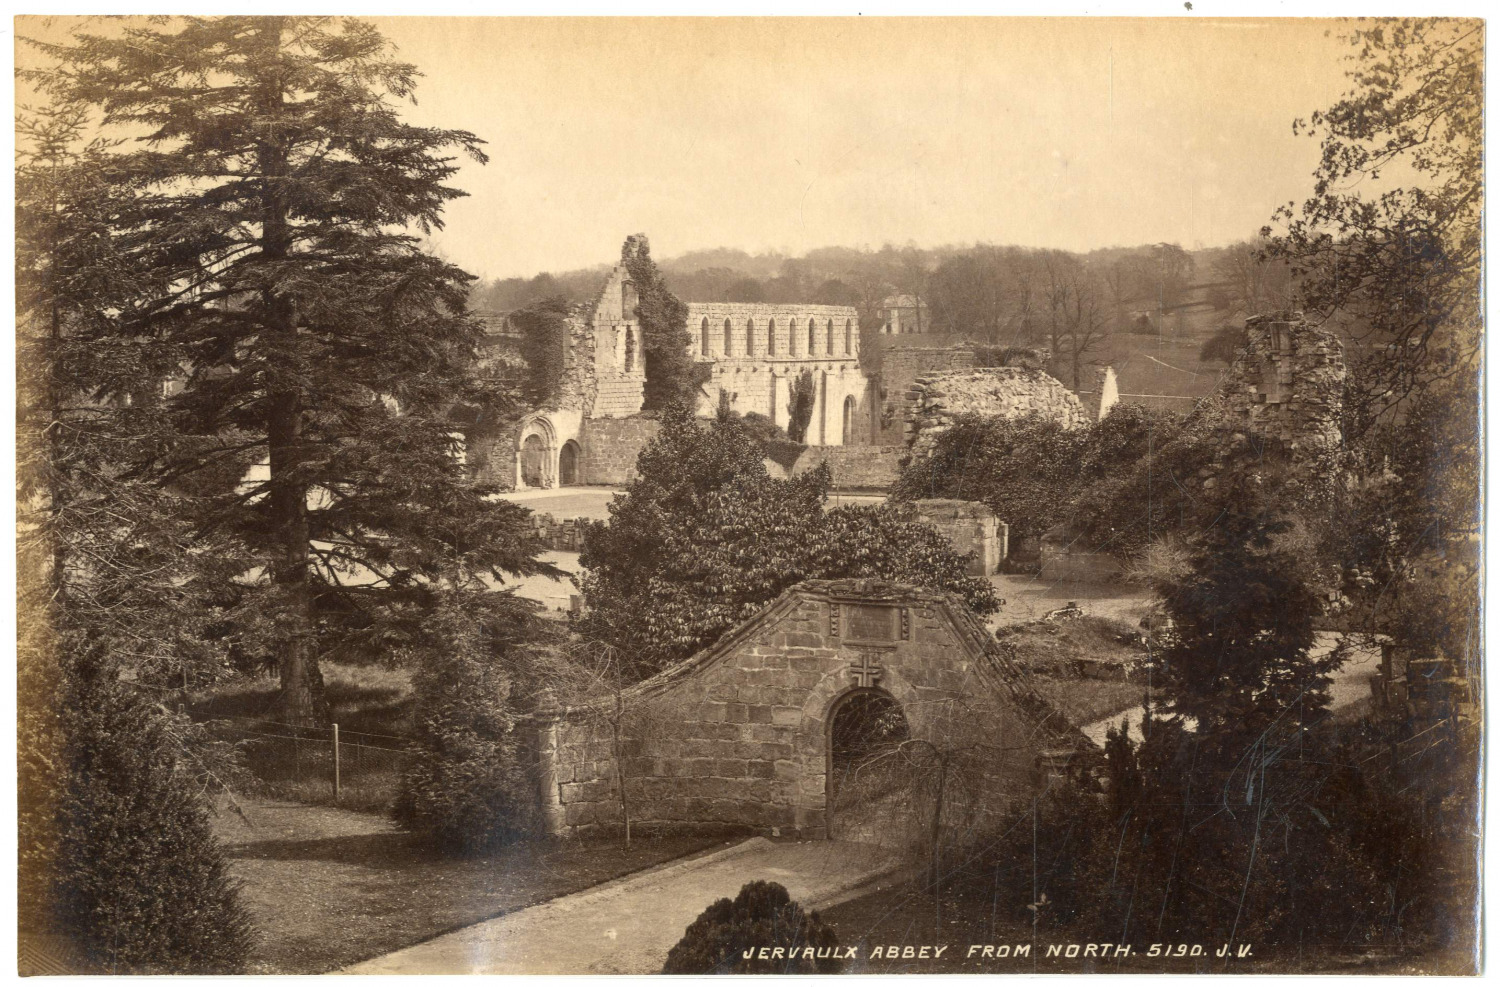 J.V., England, Jervaulx abbey from north vintage albumen print, albumin print